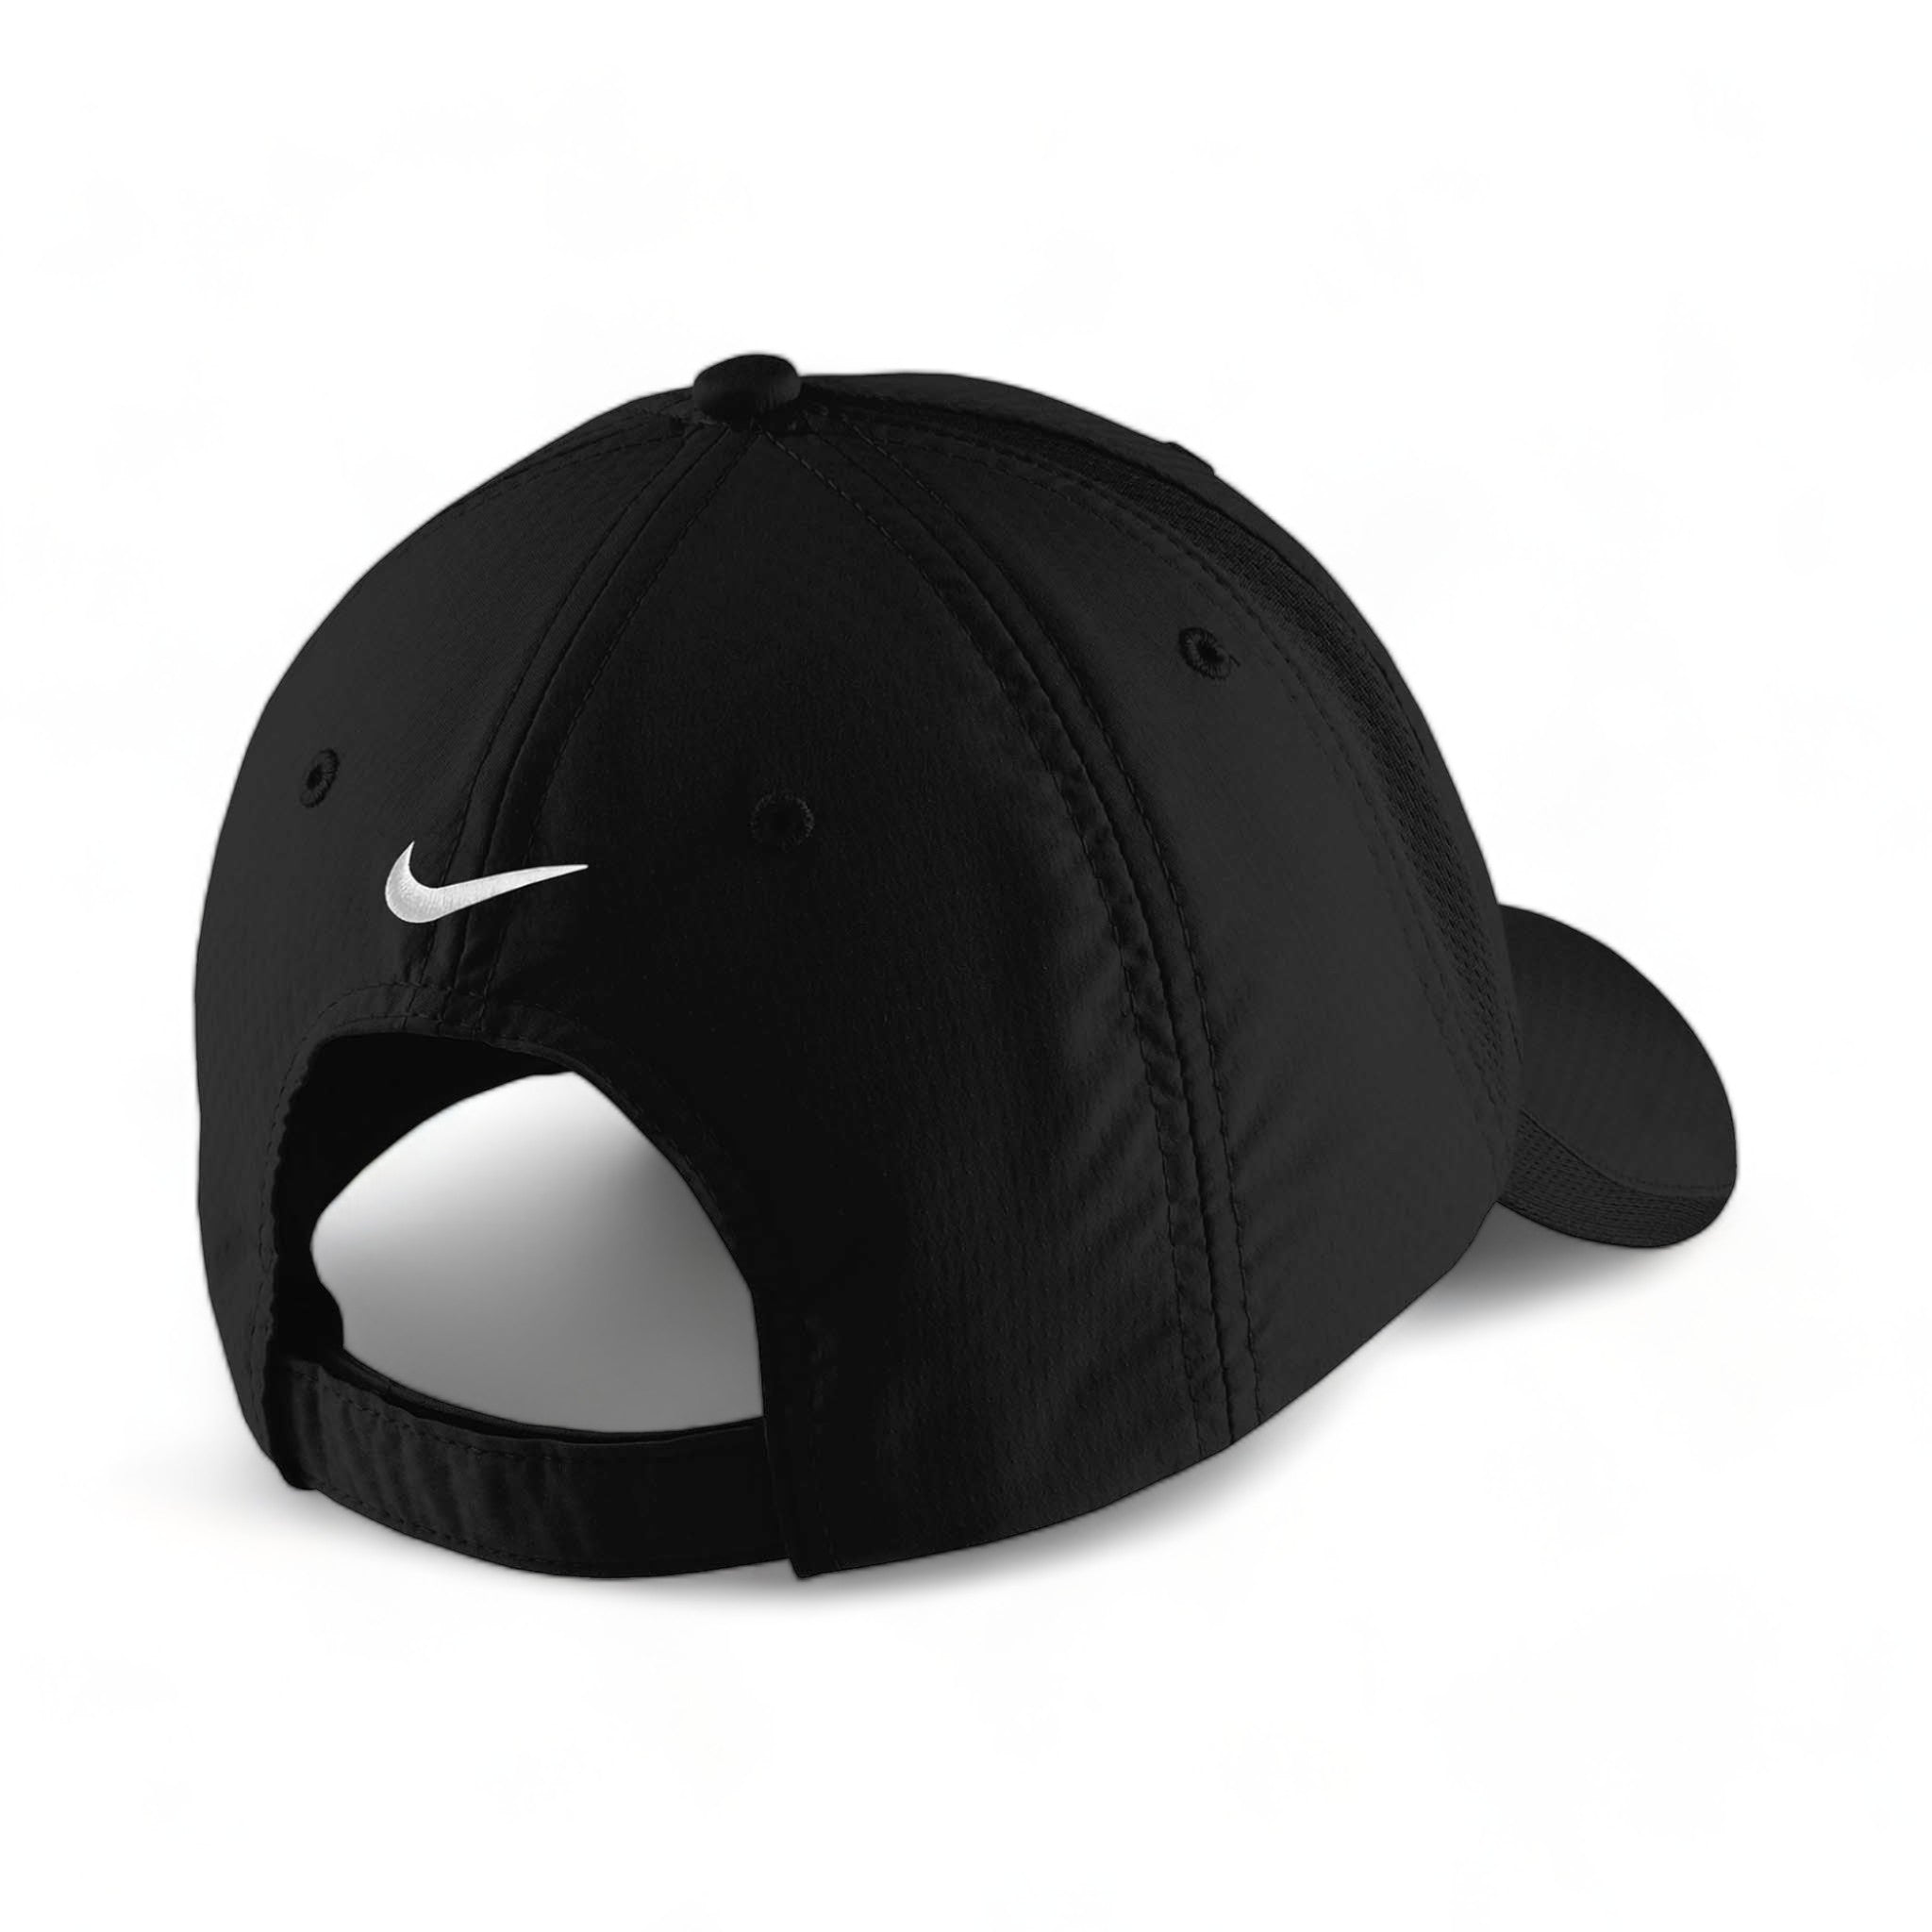 Back view of Nike NKFD9709 custom hat in black